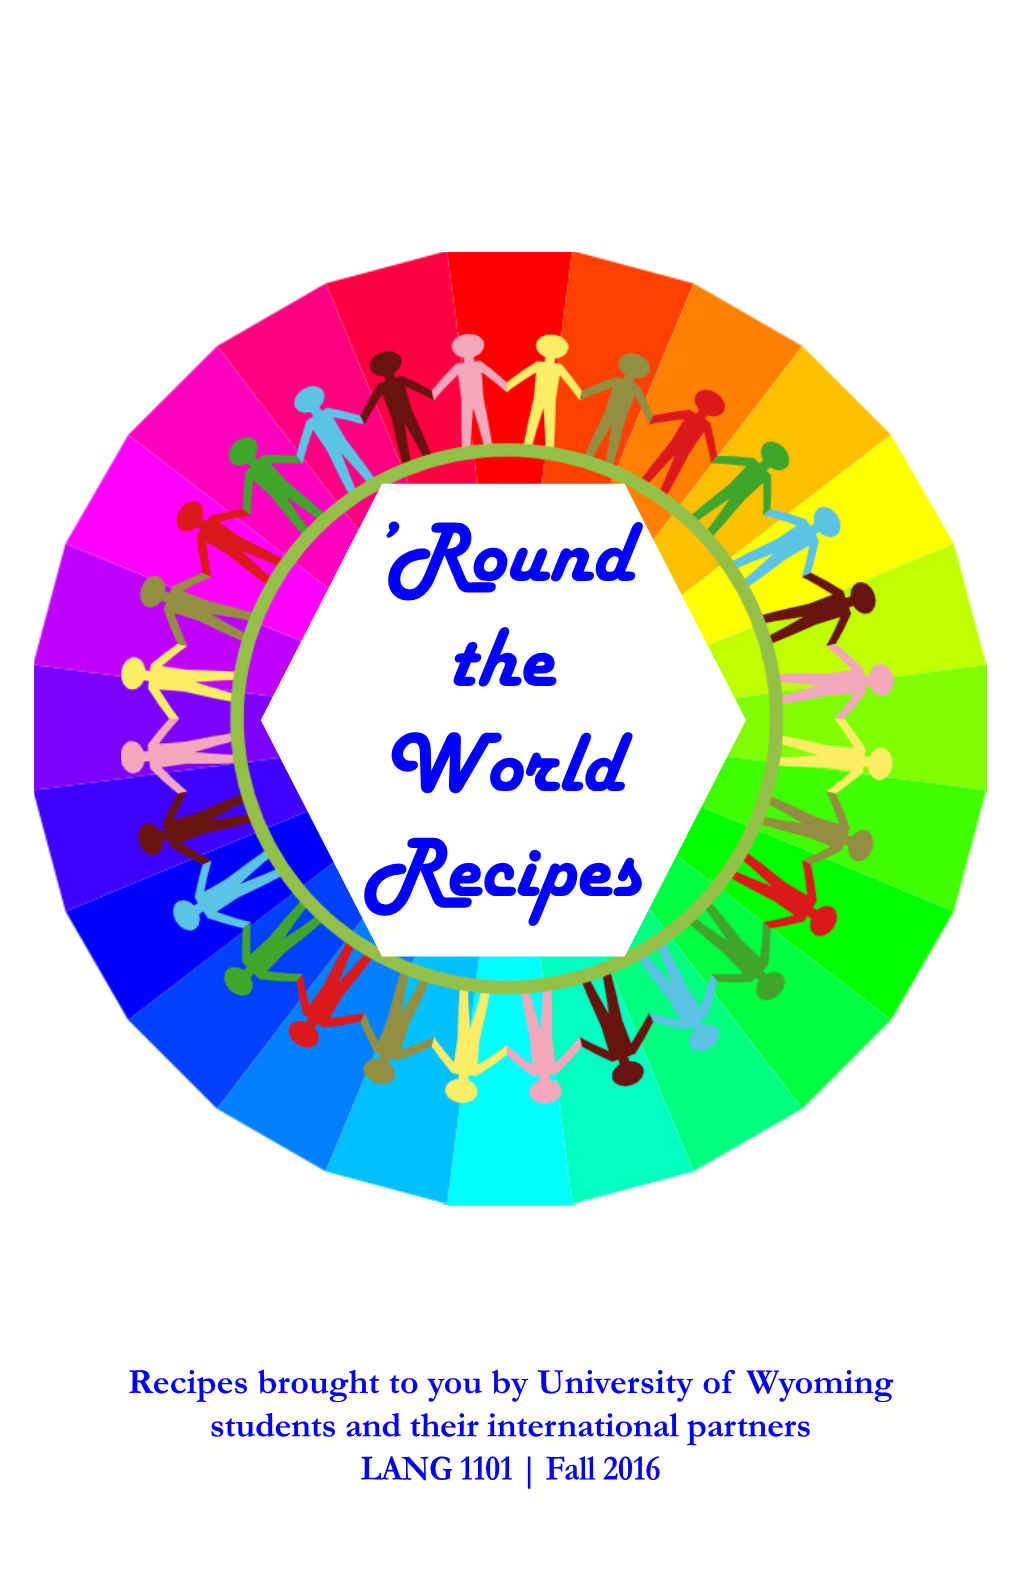 'Round the World Recipes